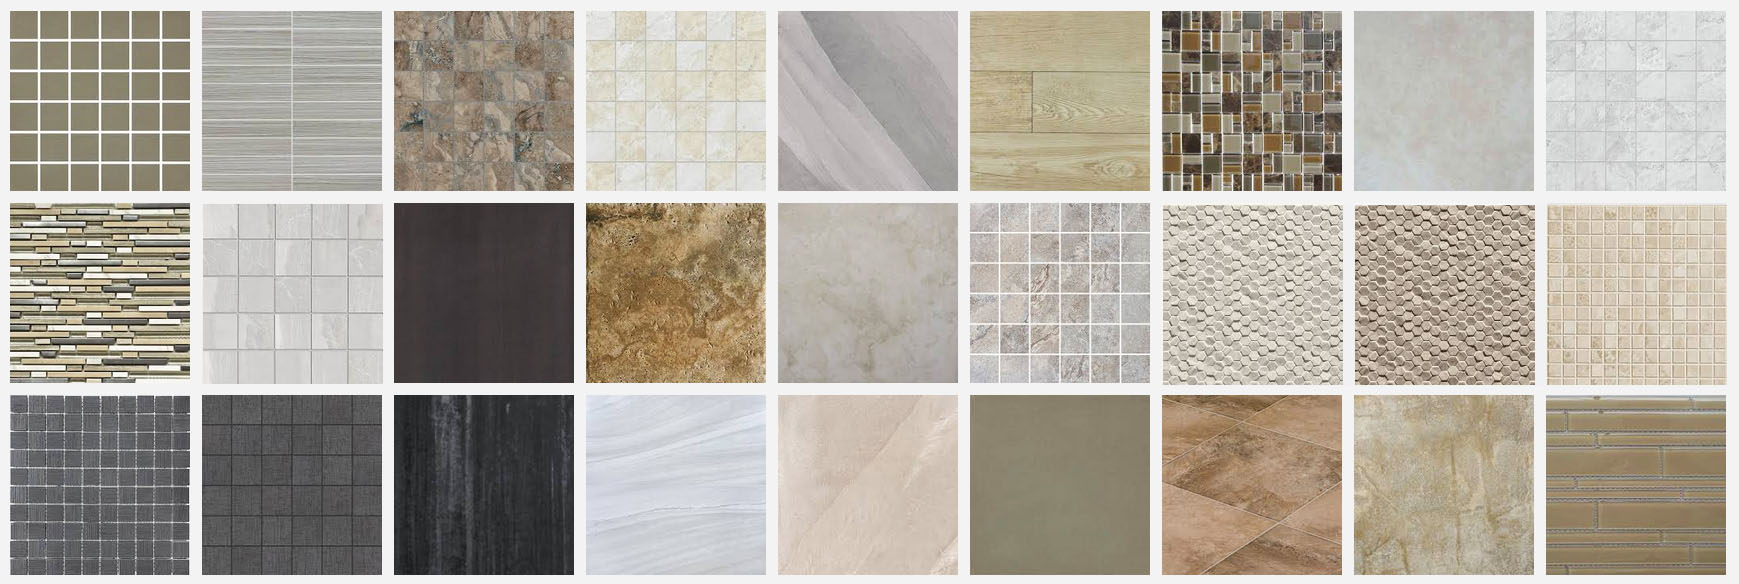 Tile Floor Samples